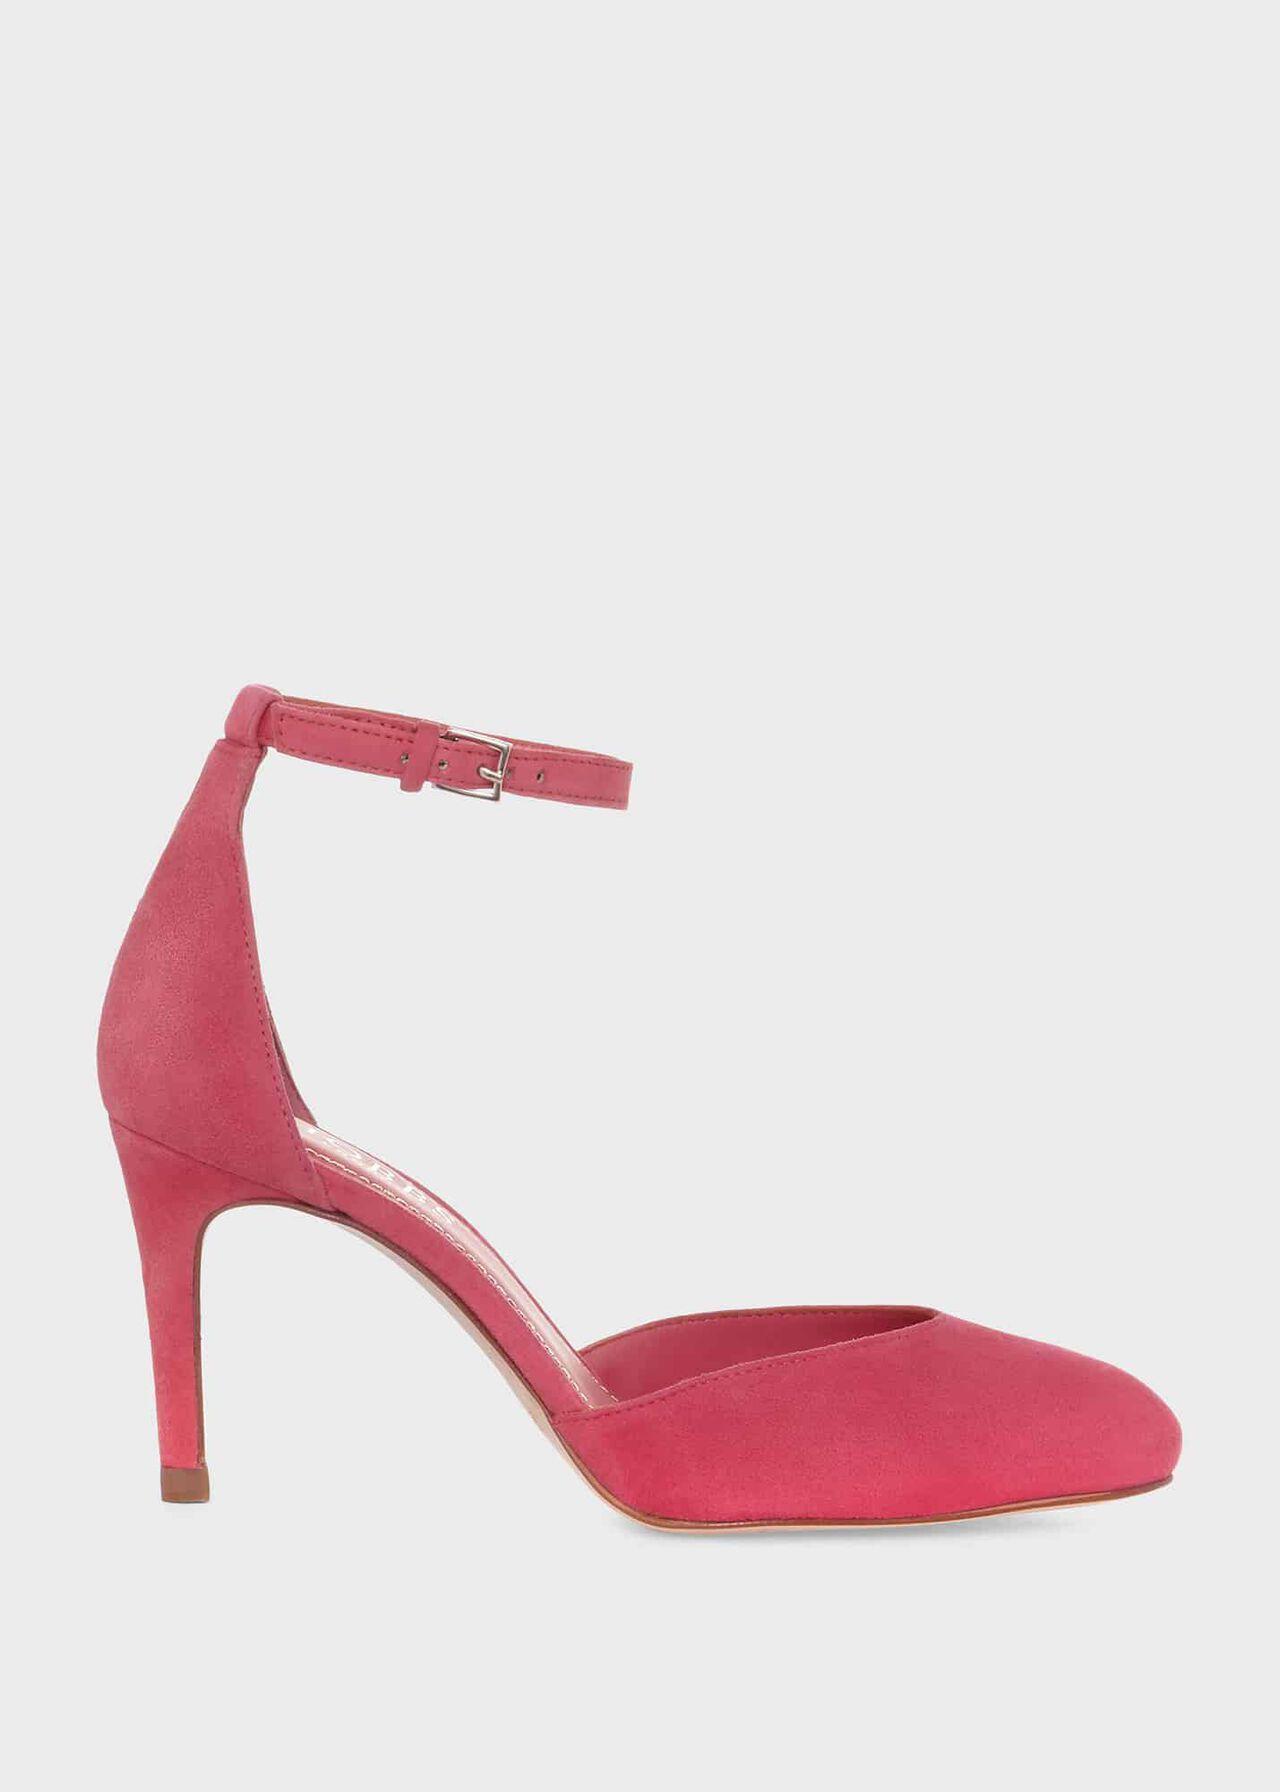 Elliya Court Shoes, Bright Pink, hi-res